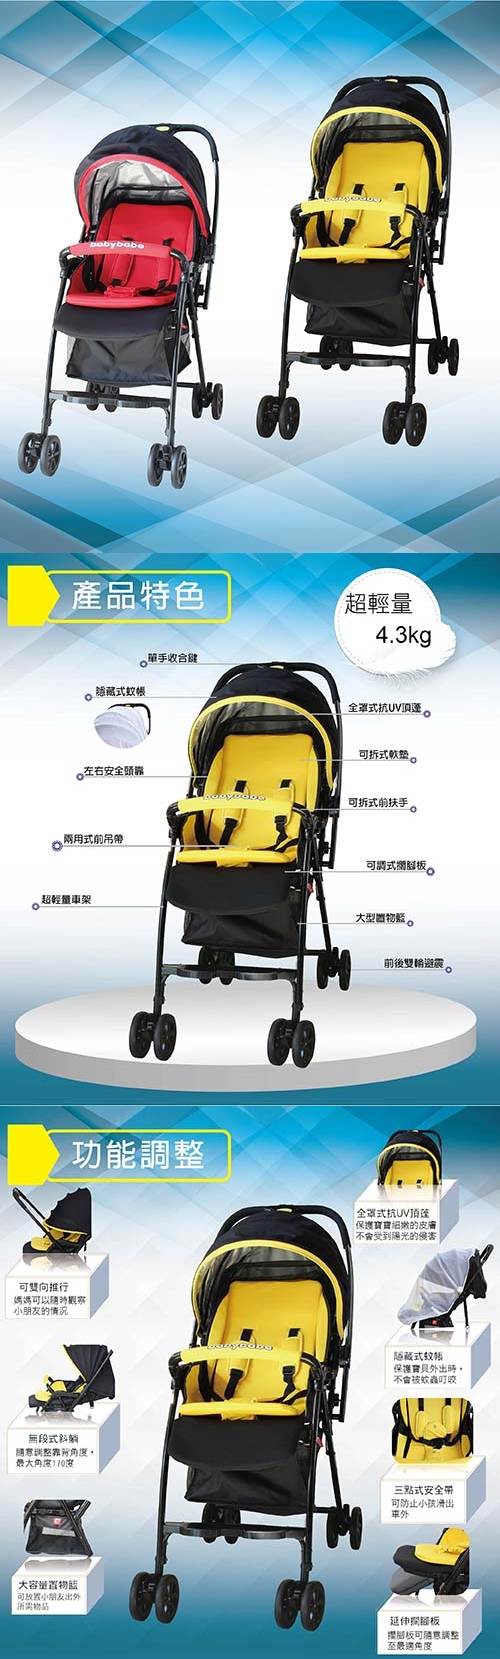 BabyBabe-加寬超輕量雙向秒縮車(黃色/紅色)B968R15